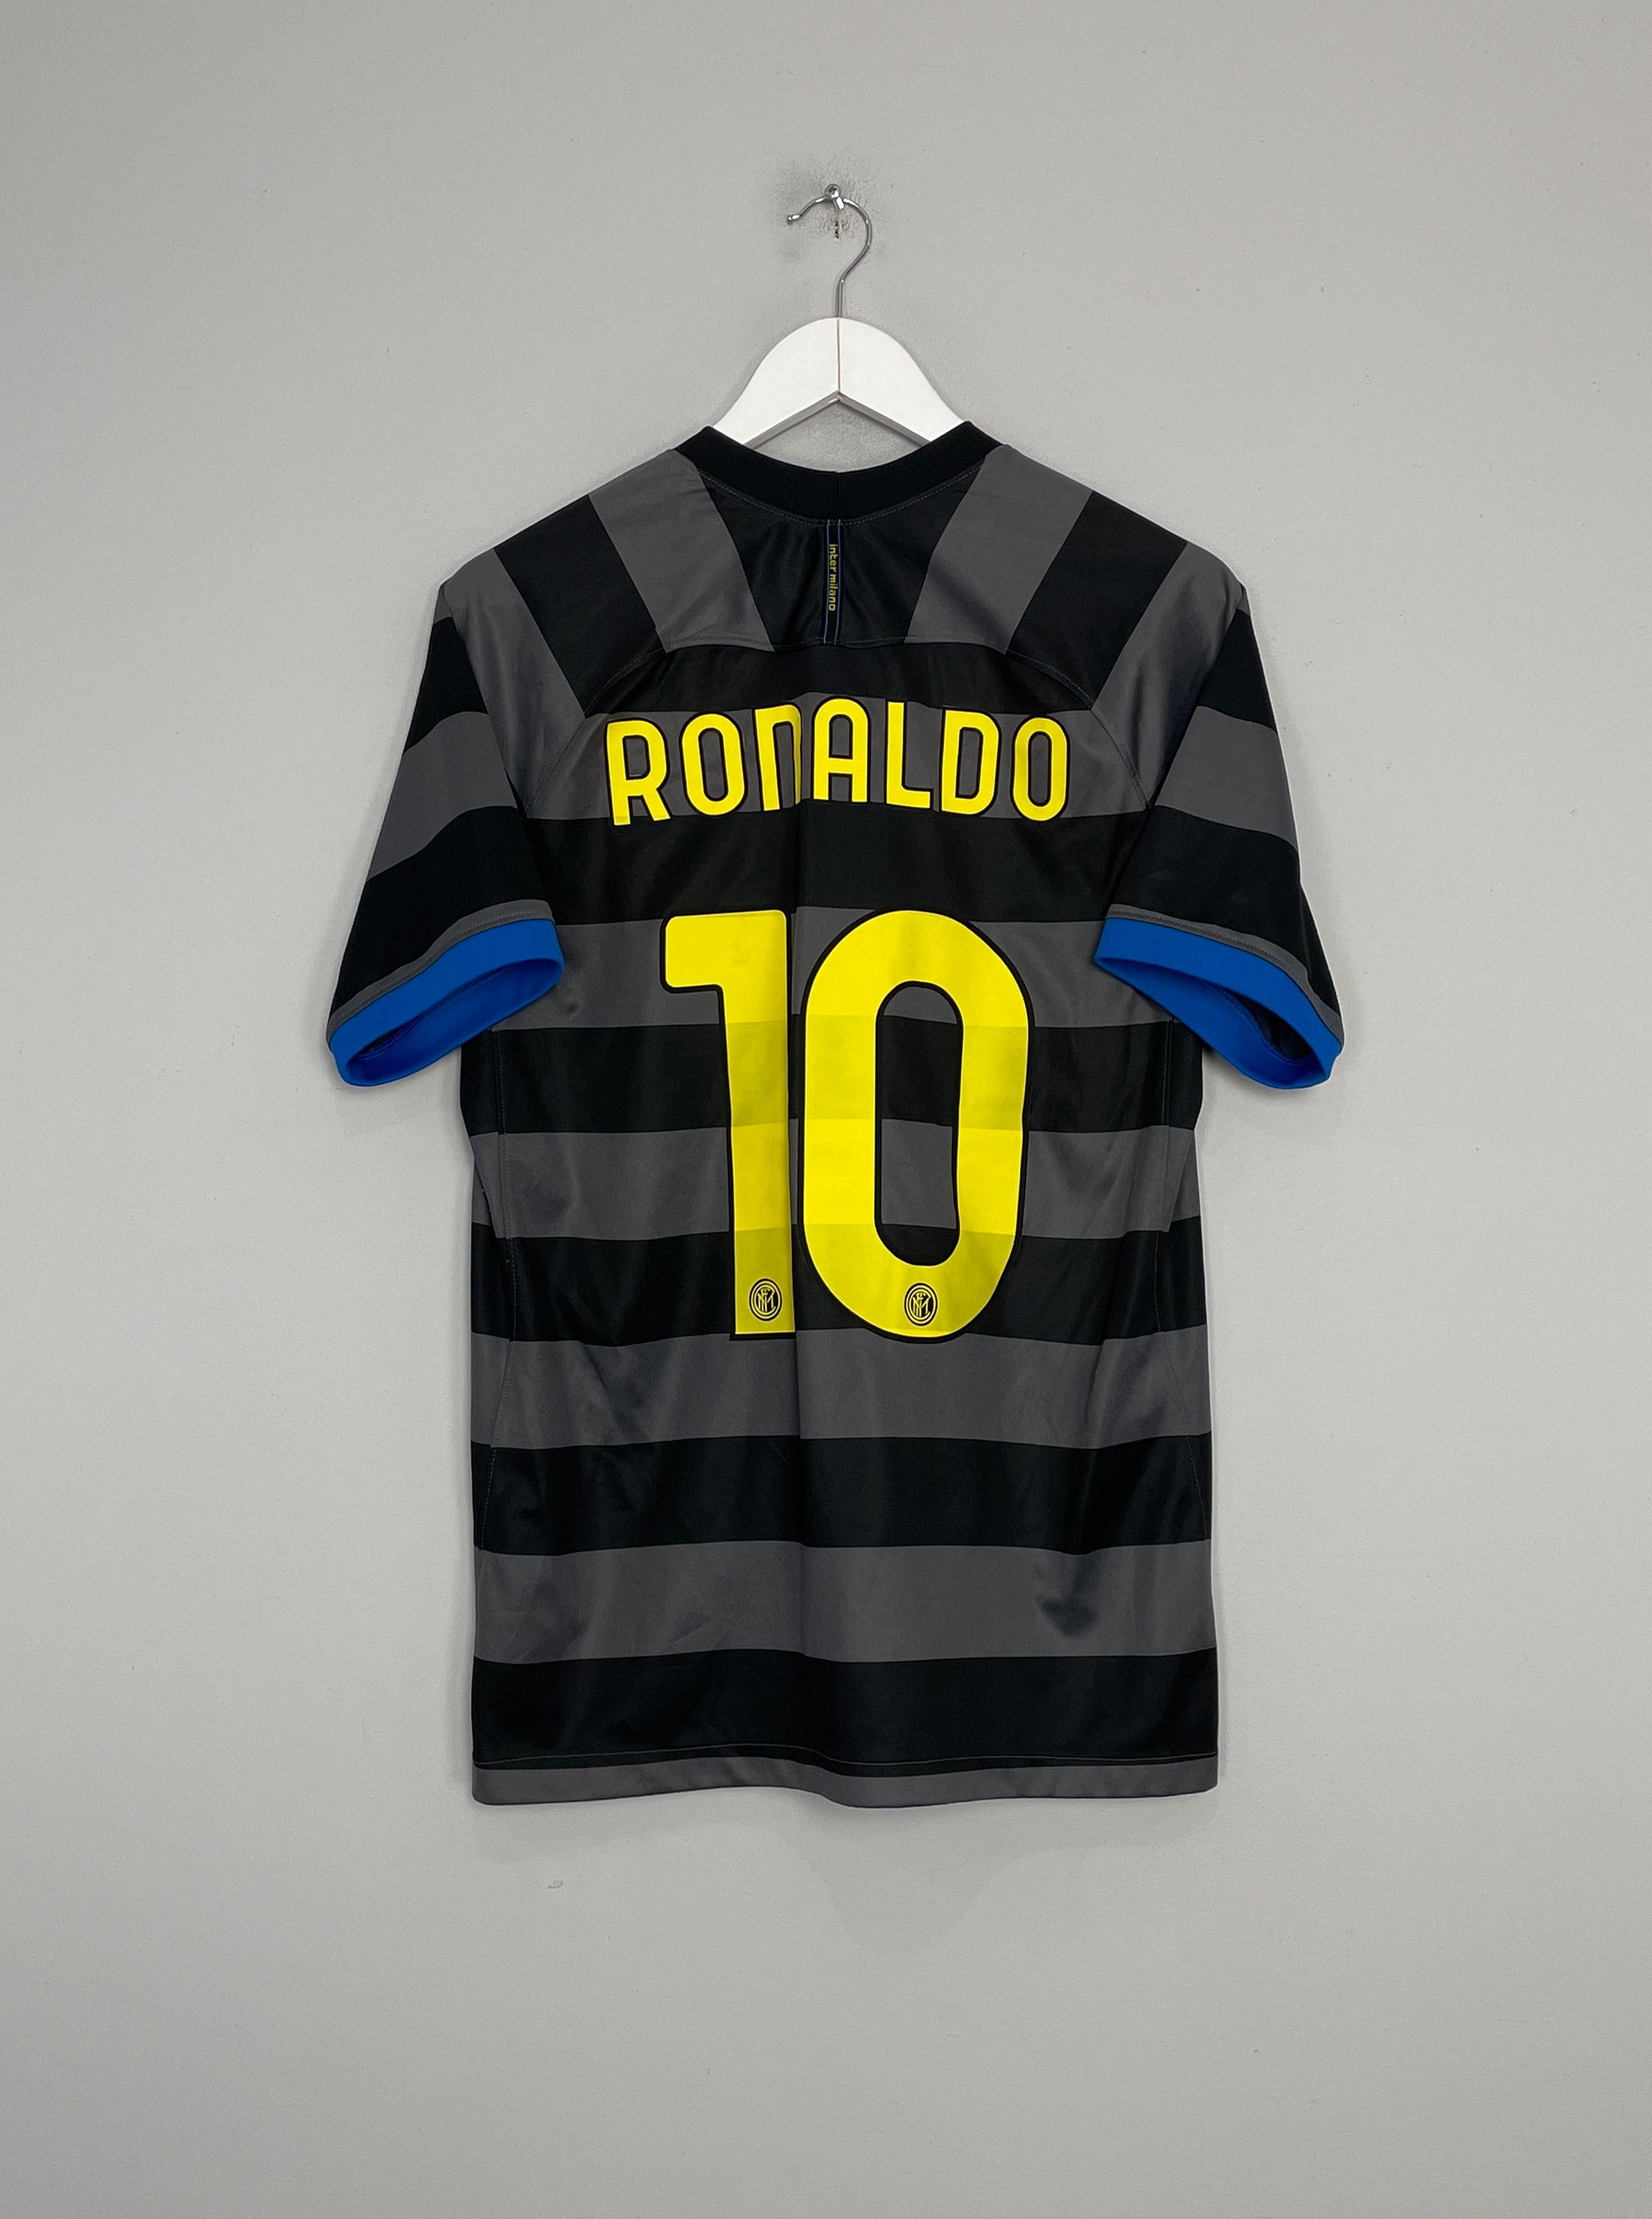 Image of the Ronaldo Inter Milan shirt from the 2020/21 season